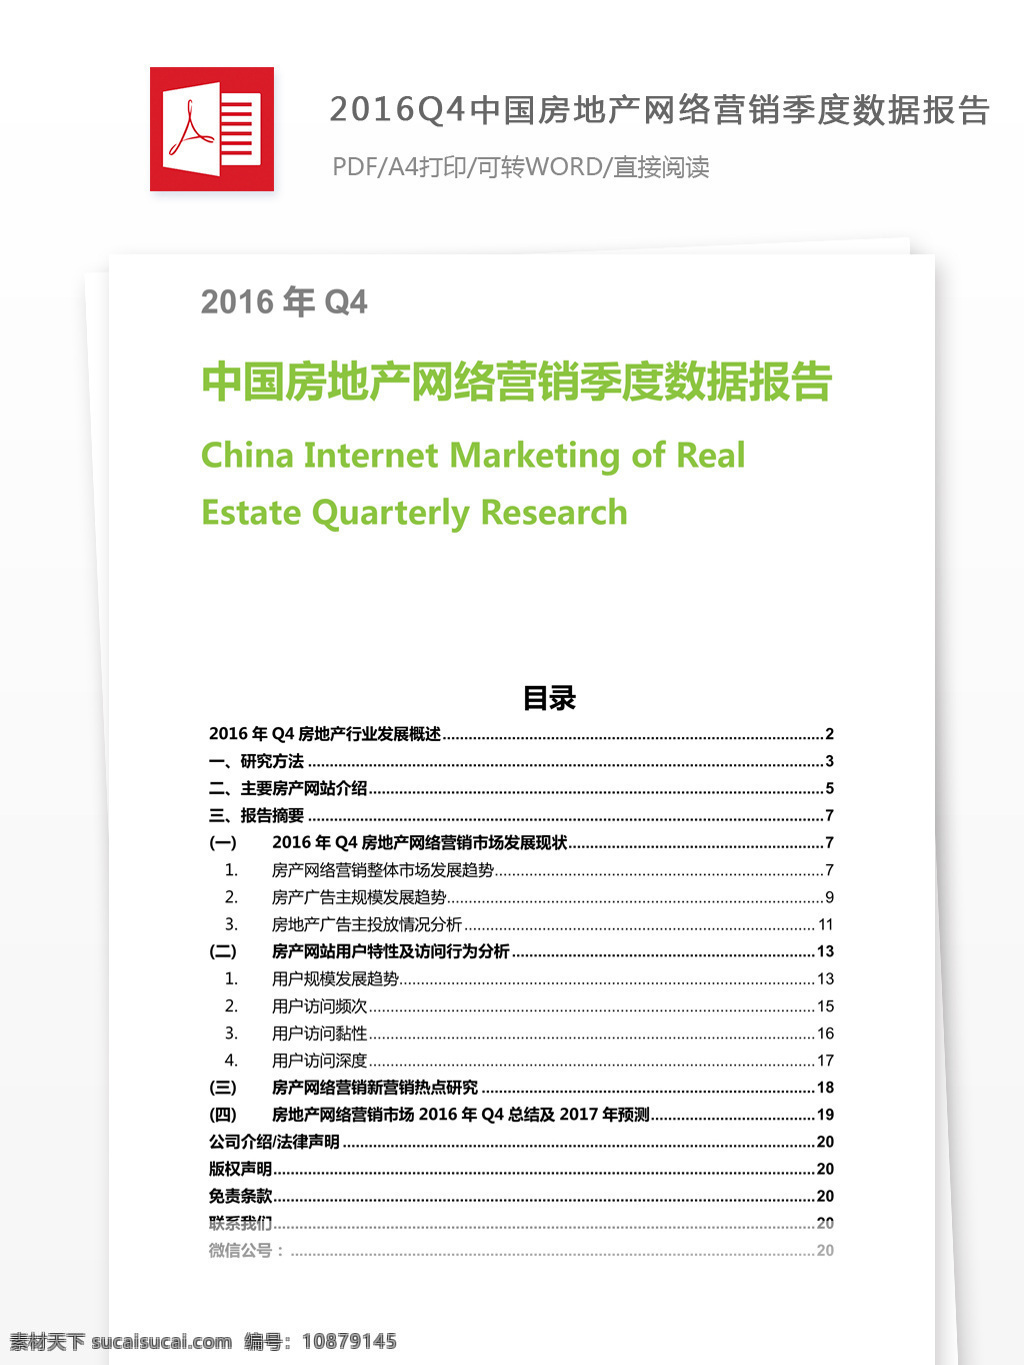 q4 中国 房地产 网络营销 季度 数据 报告 摘要 数据报告 网络 房产